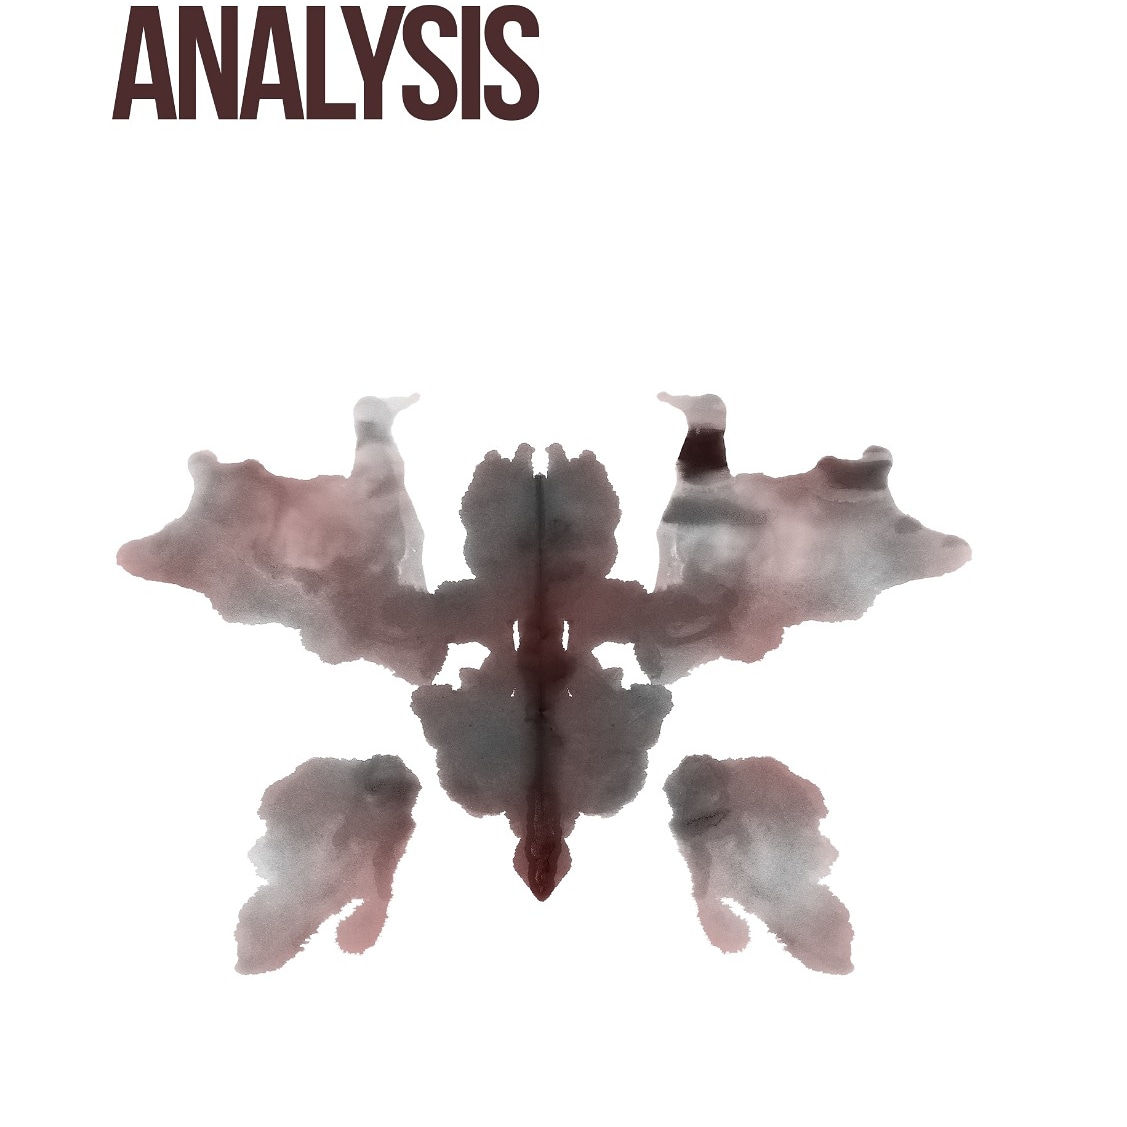 "Analysis"